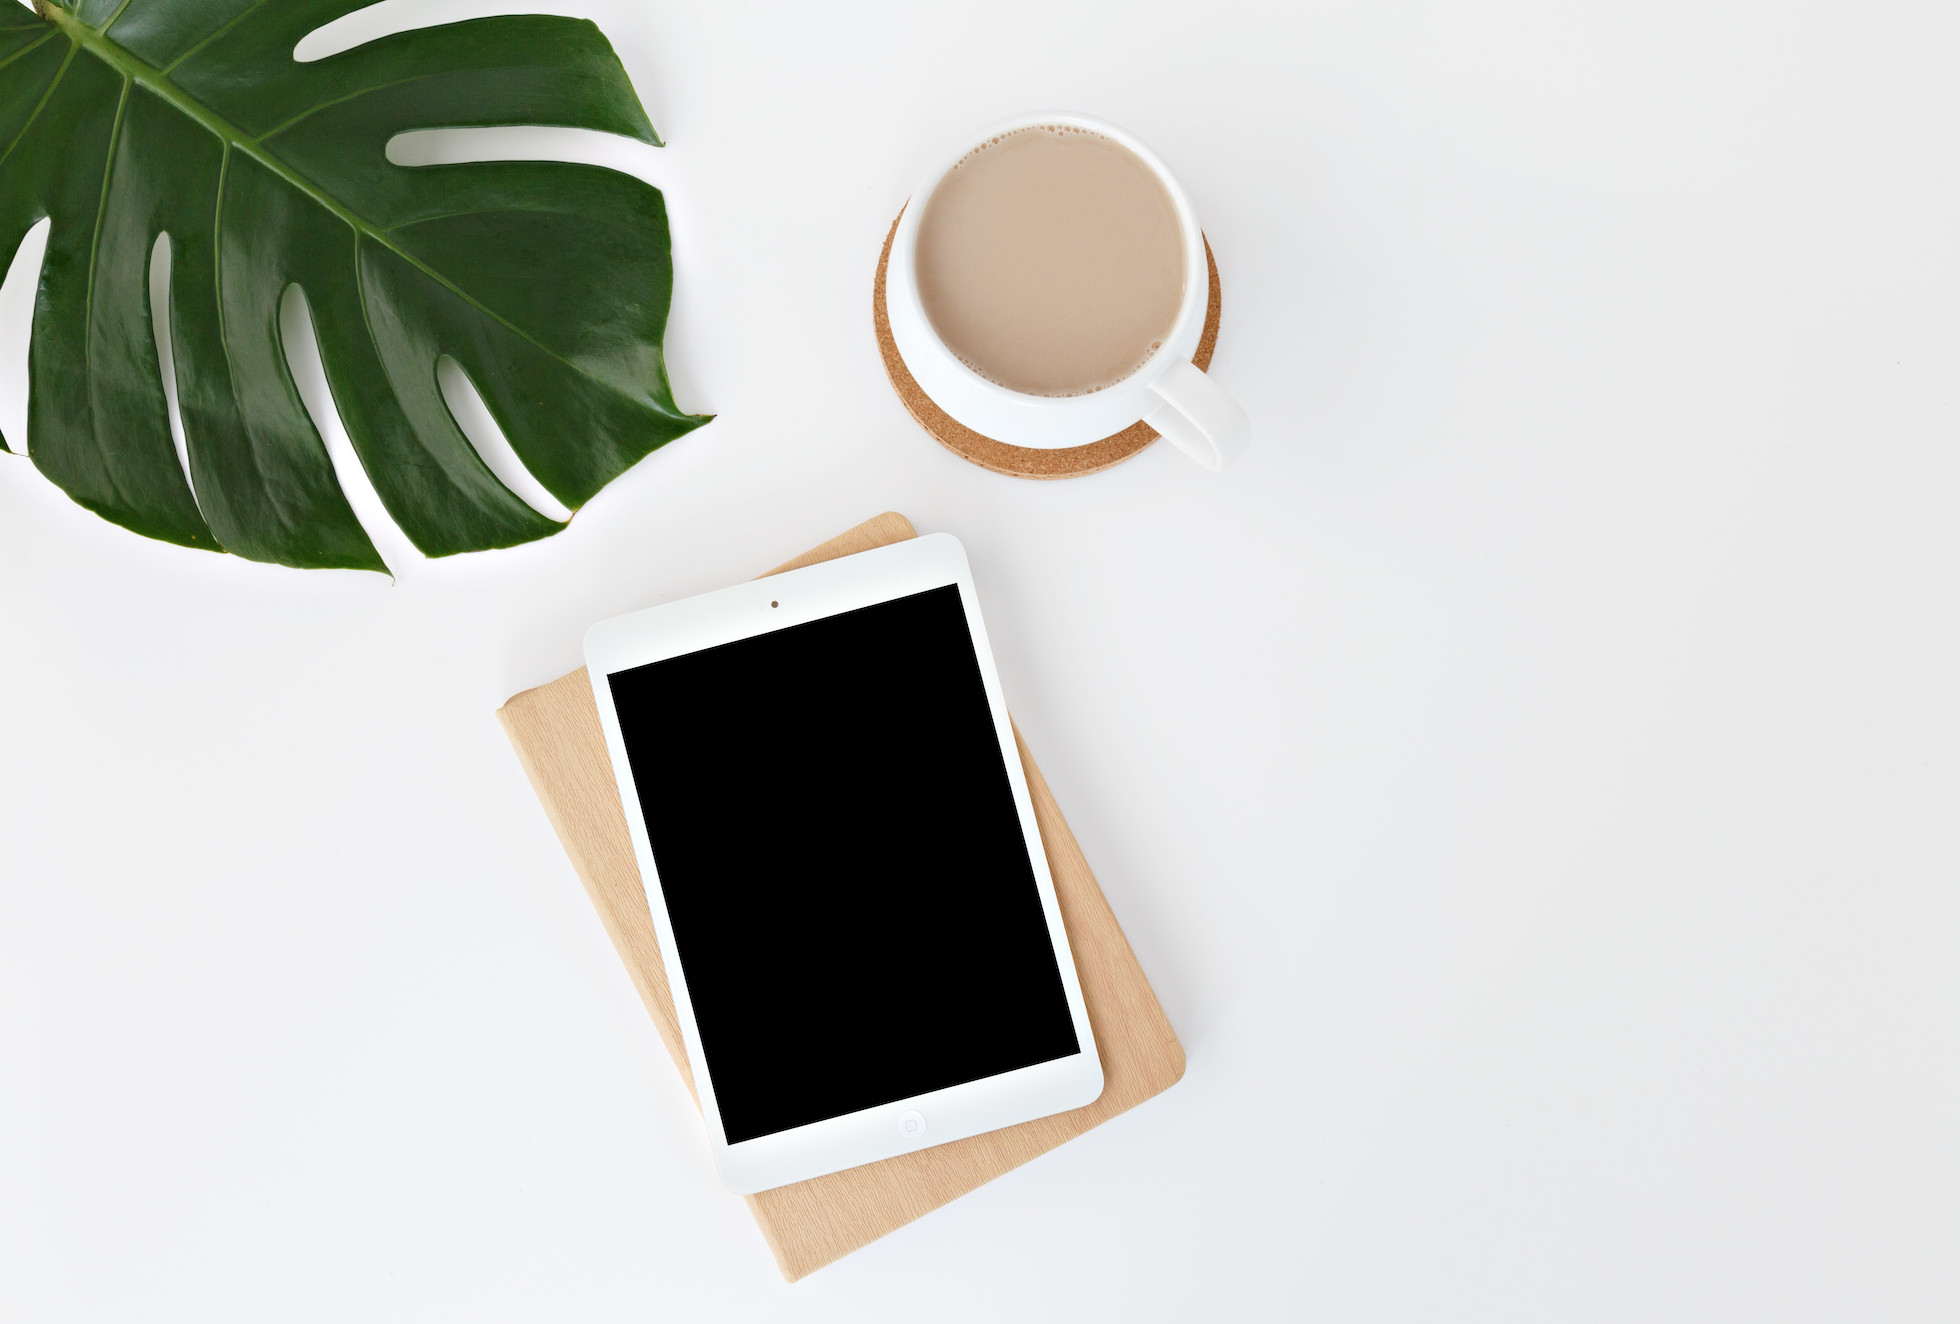 iPad coffee and plant leaf